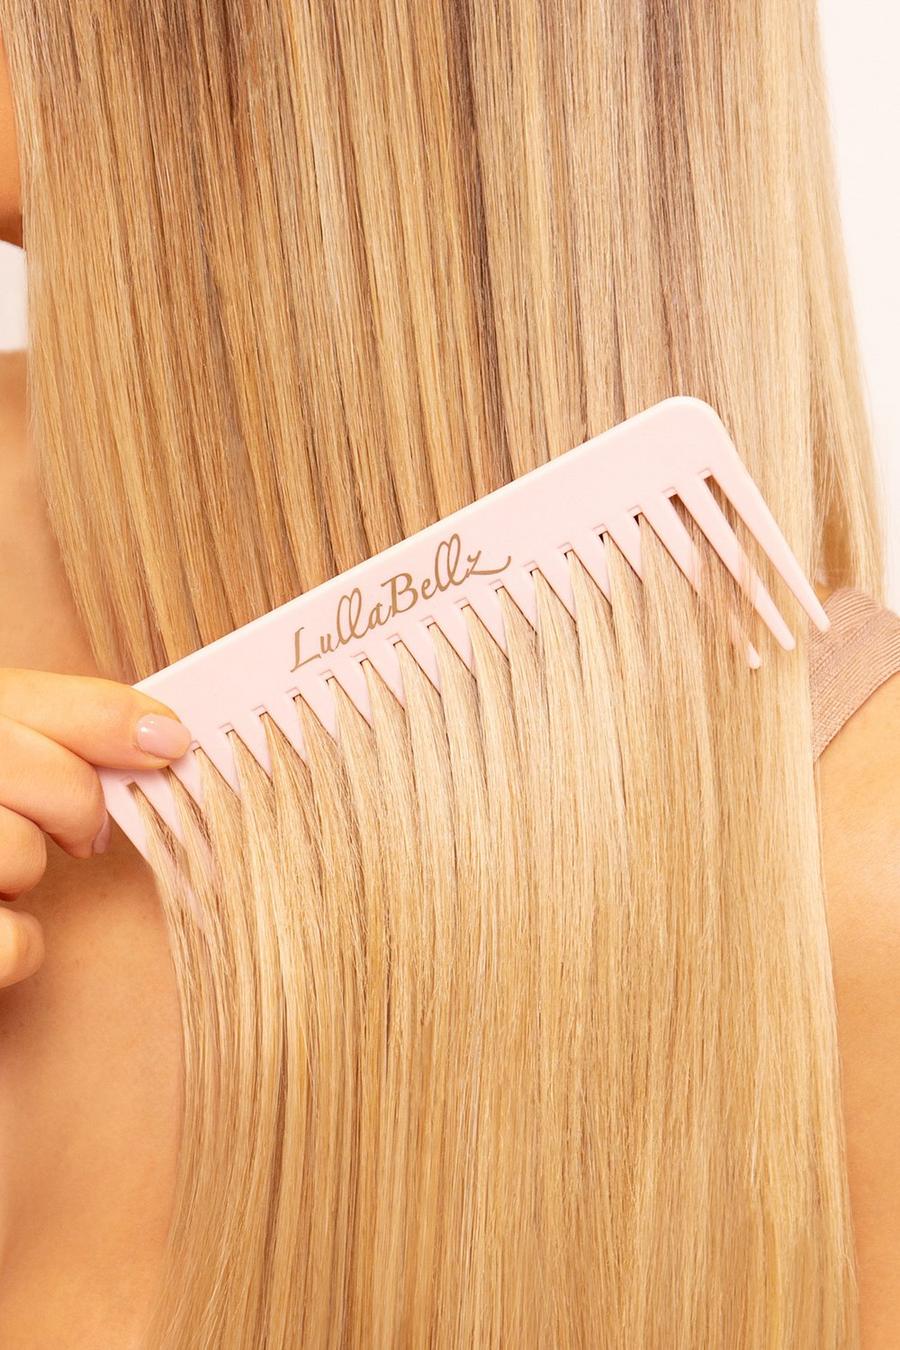 LullaBellz - Pettine per capelli ondulati Hollywood Wave, Rosa confetto